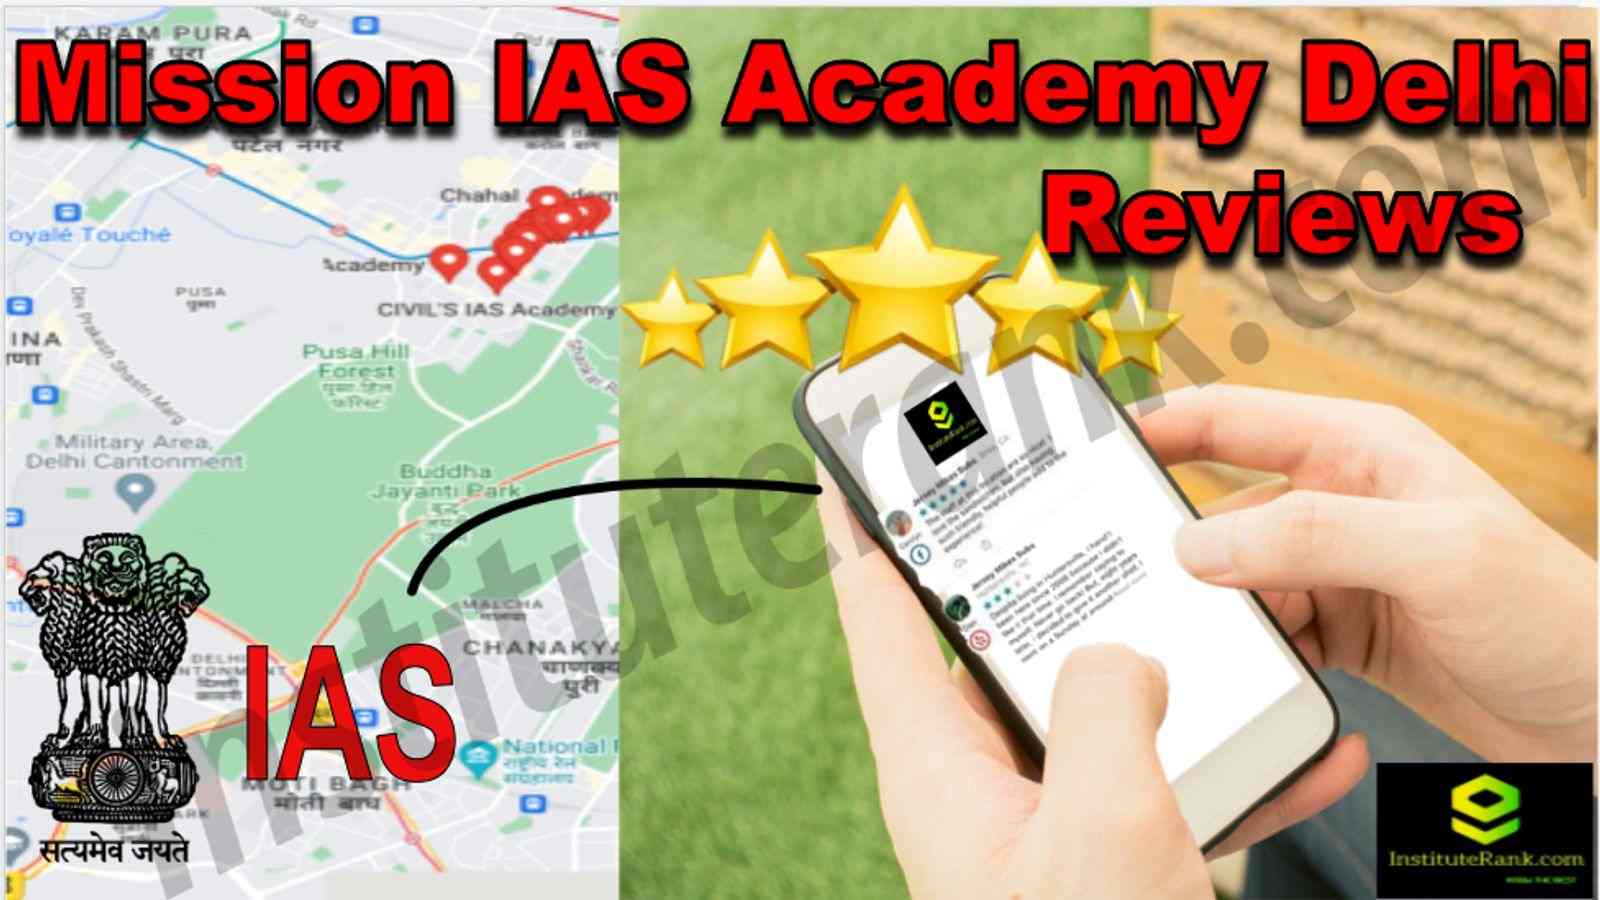 Mission IAS Academy Delhi Reviews